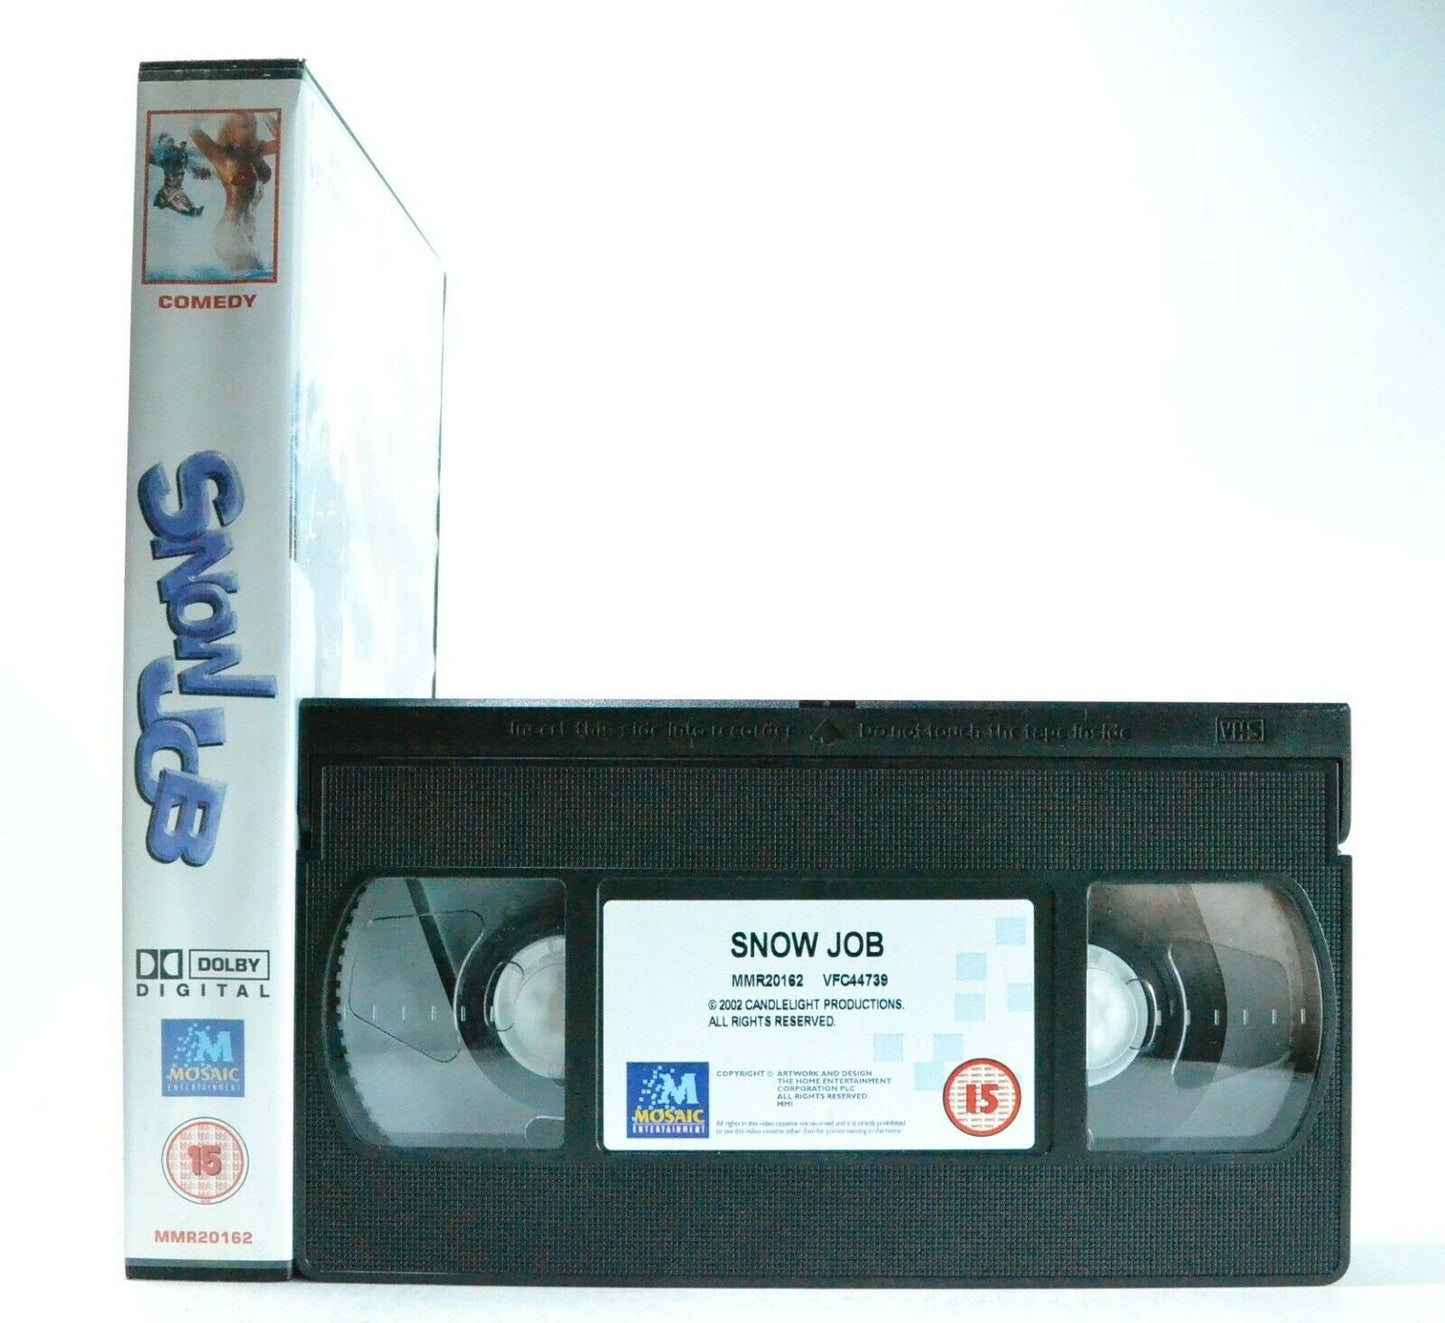 Snow Job: Comedy (2003) - Large Box - An Aspen Adventures - E.K.Thomas - Pal VHS-